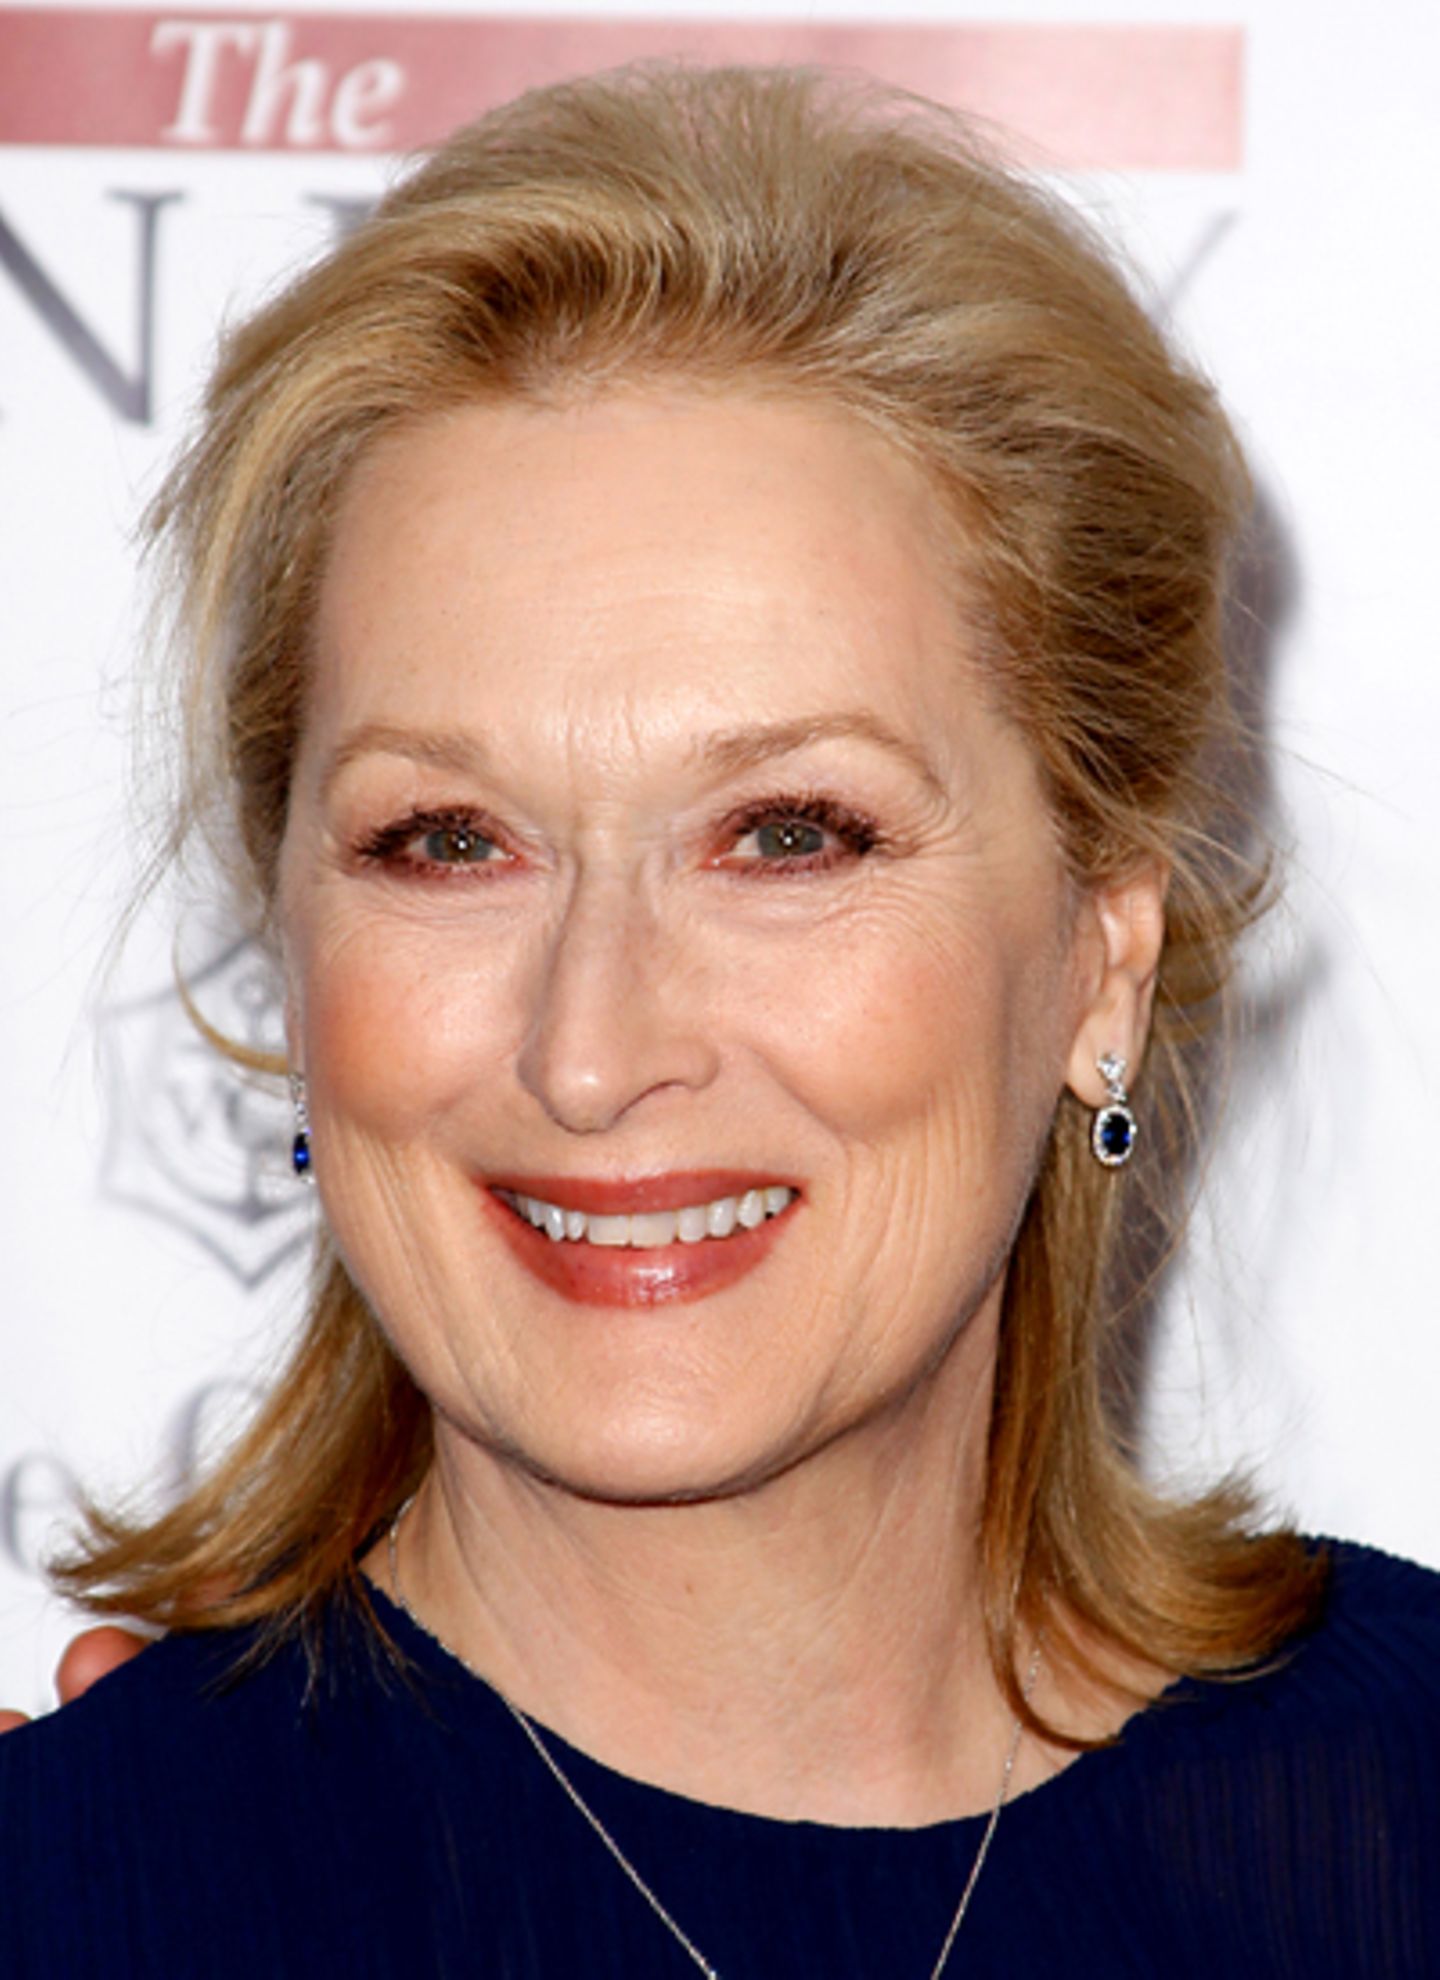 Oscar Nominierte: Meryl Streep in "The Iron Lady"